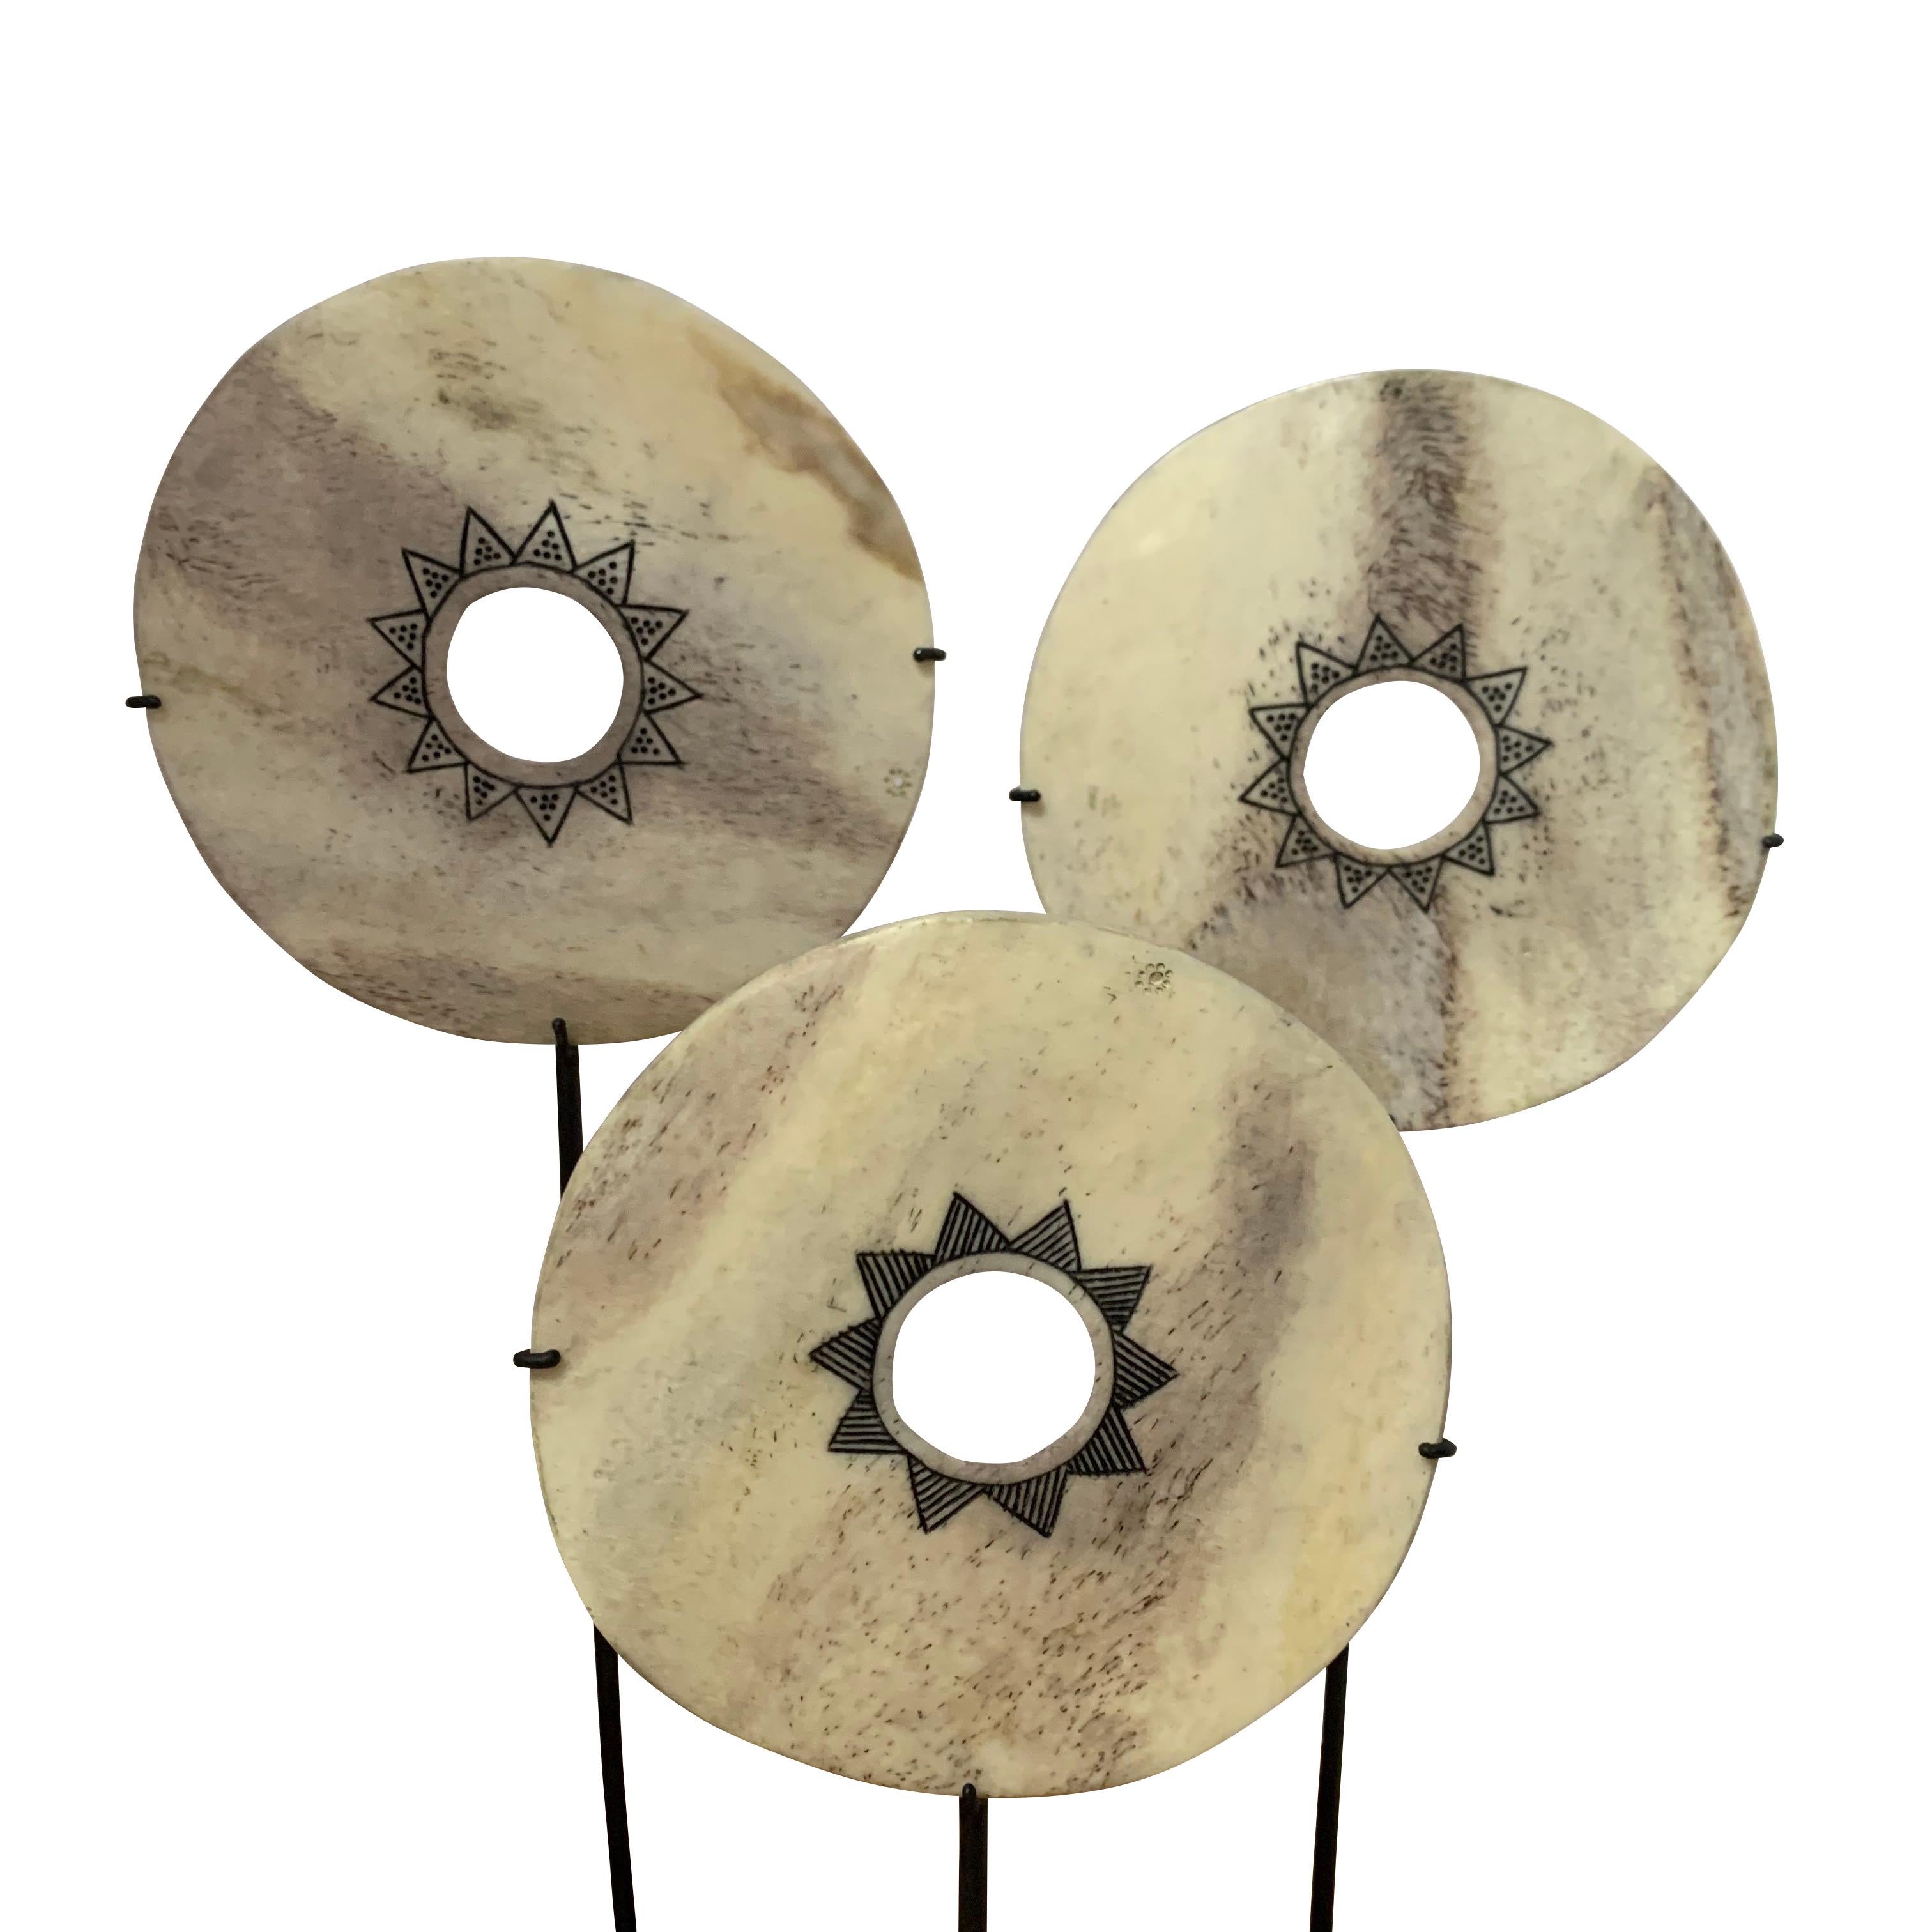 Indonesian white bone disc with decorative black engraving
Discs measure 4